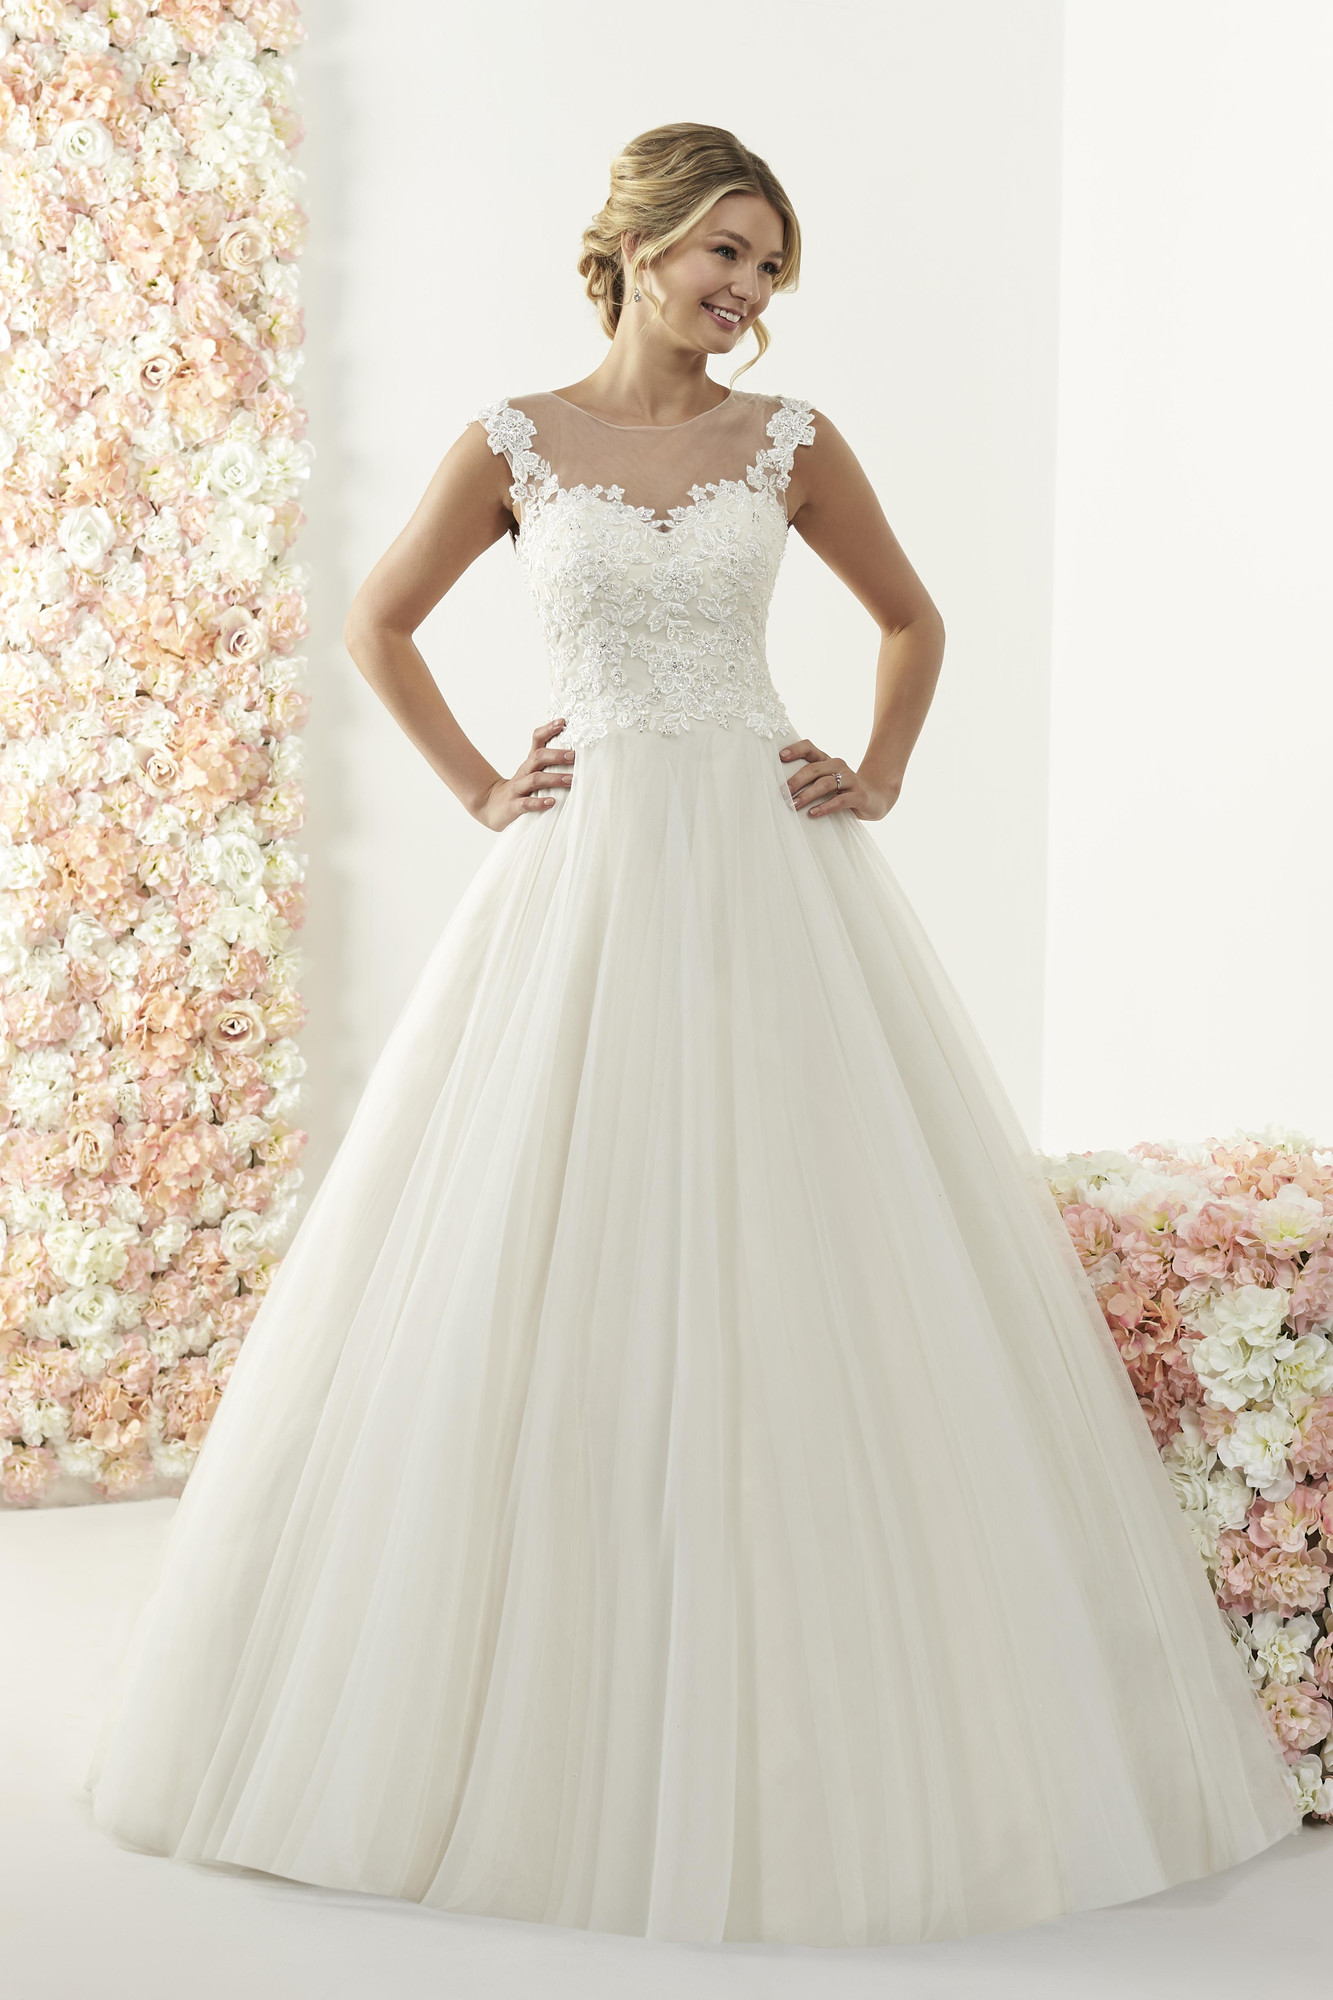 Olivia Wedding Dress from Romantica ...